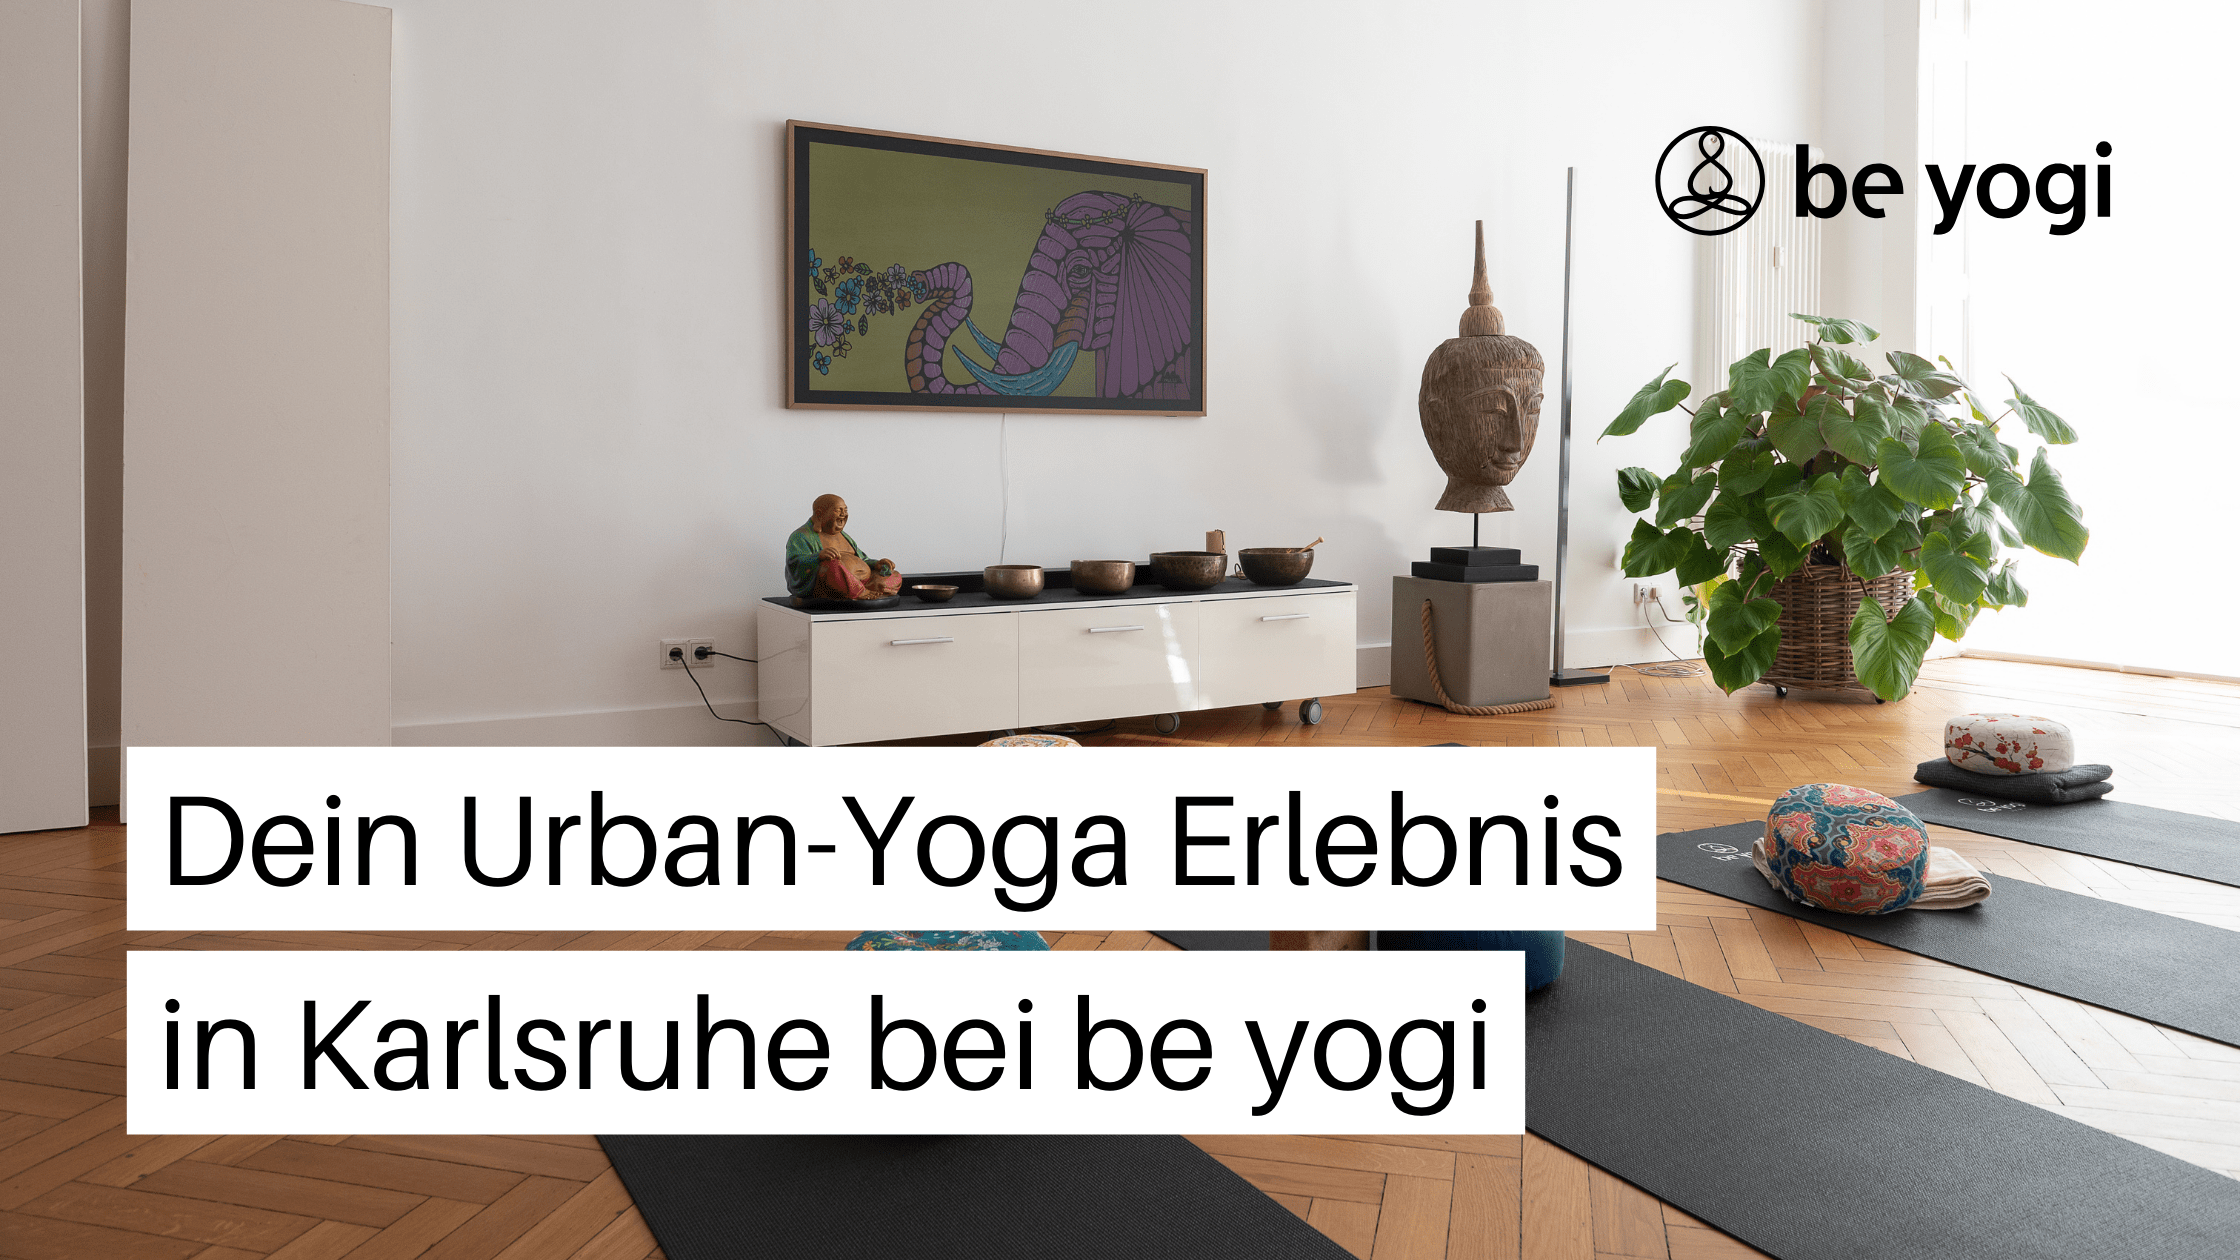 Dein Urban-Yoga Erlebnis in Karlsruhe bei be yogi